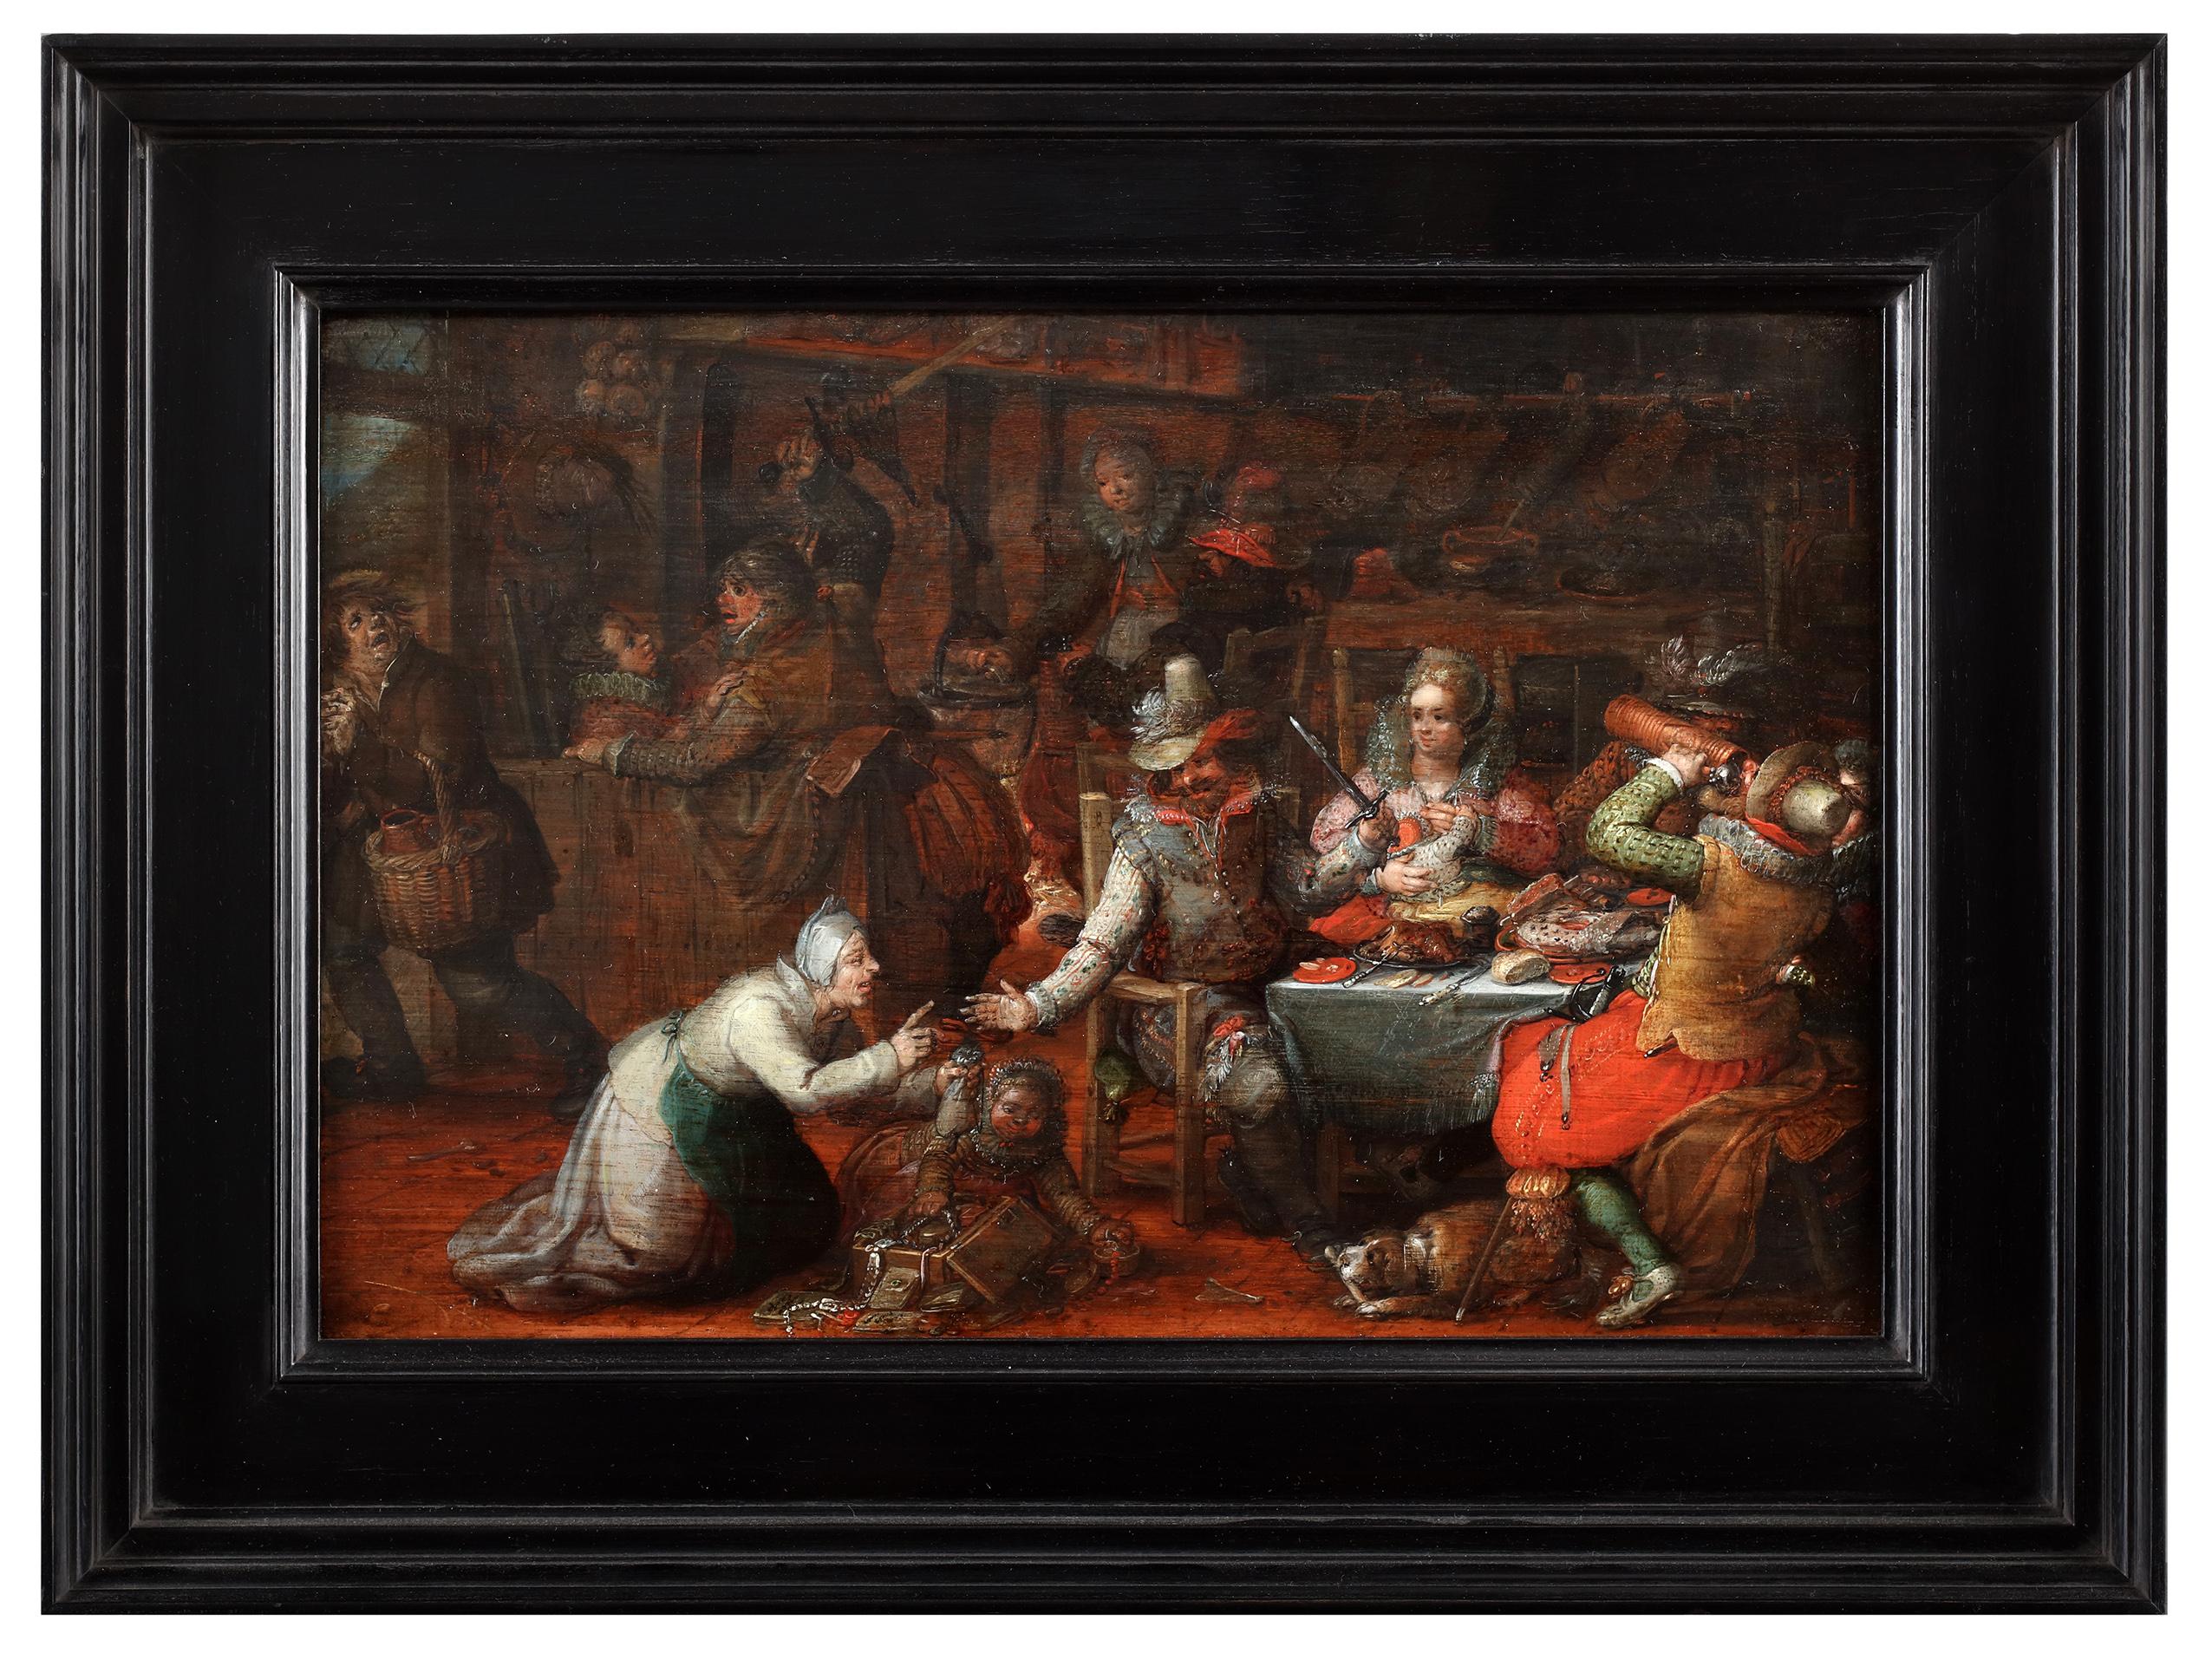 The peasant's sorrow - David Vinckeboons (1576 - 1632)  - Dutch School Painting by David Vinckboons